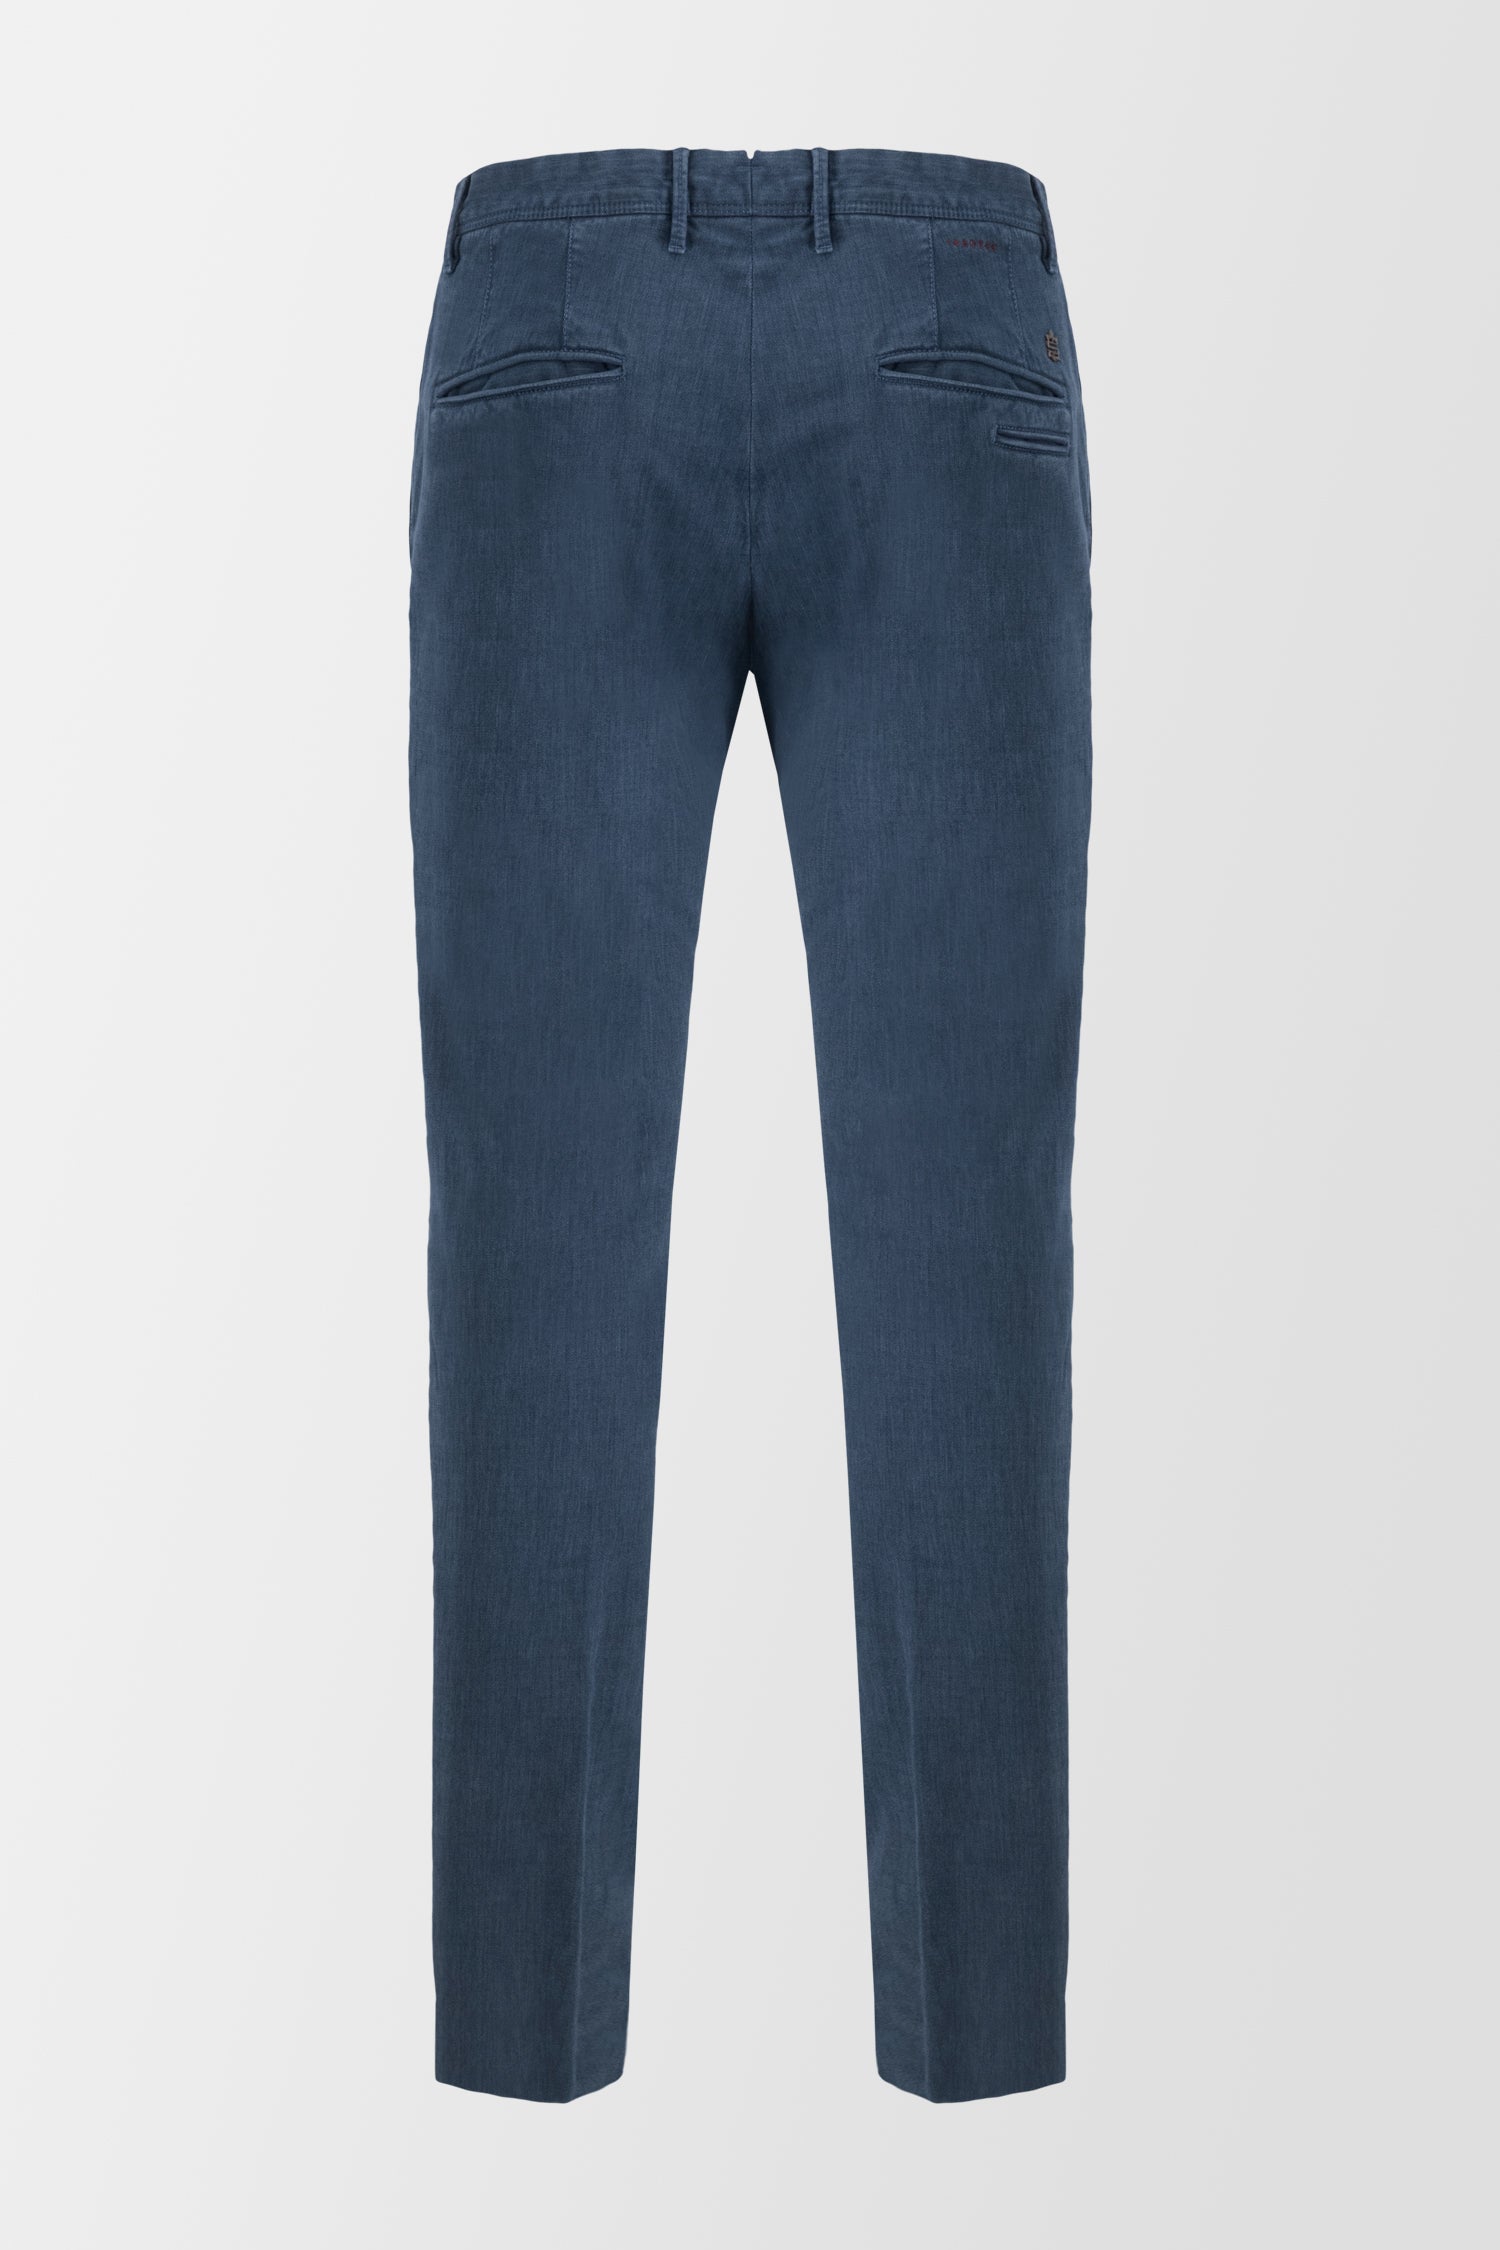 Incotex Blue Casual Trousers